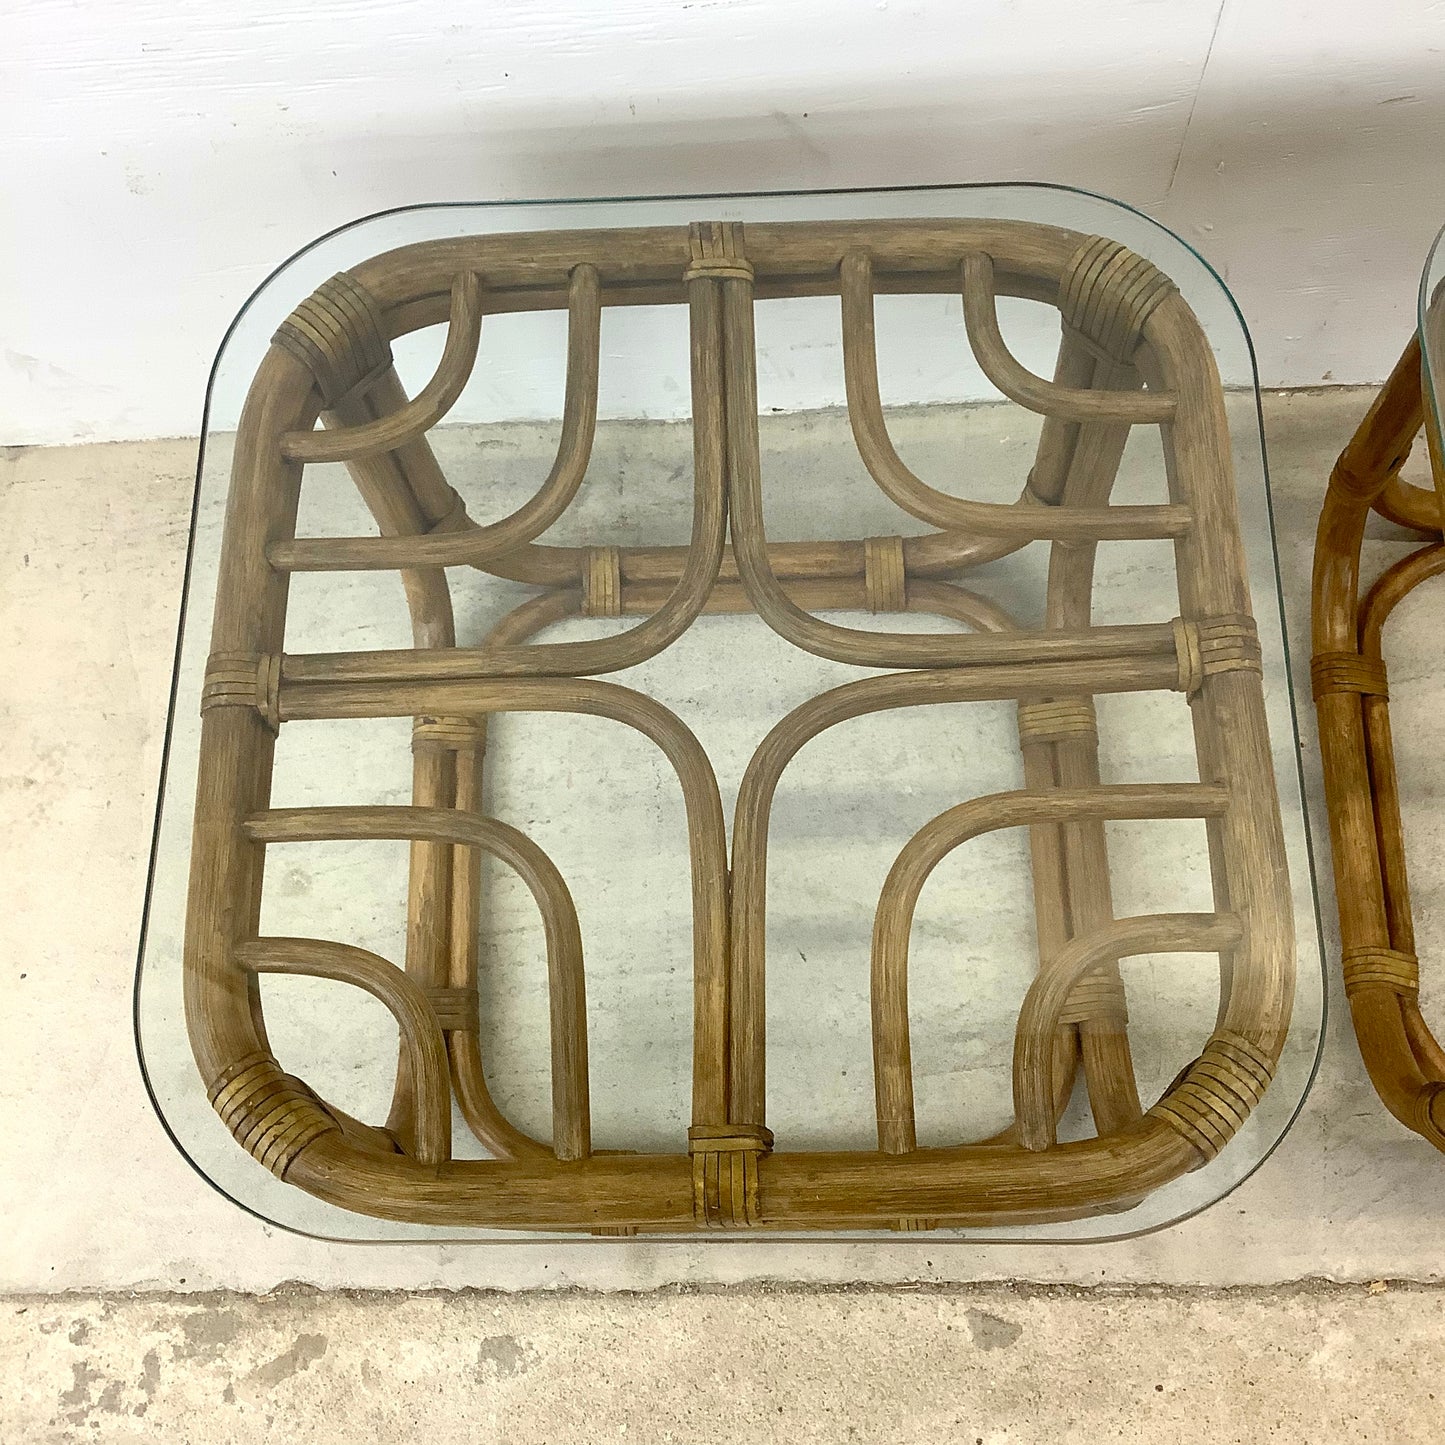 Pair Vintage Rattan End Tables